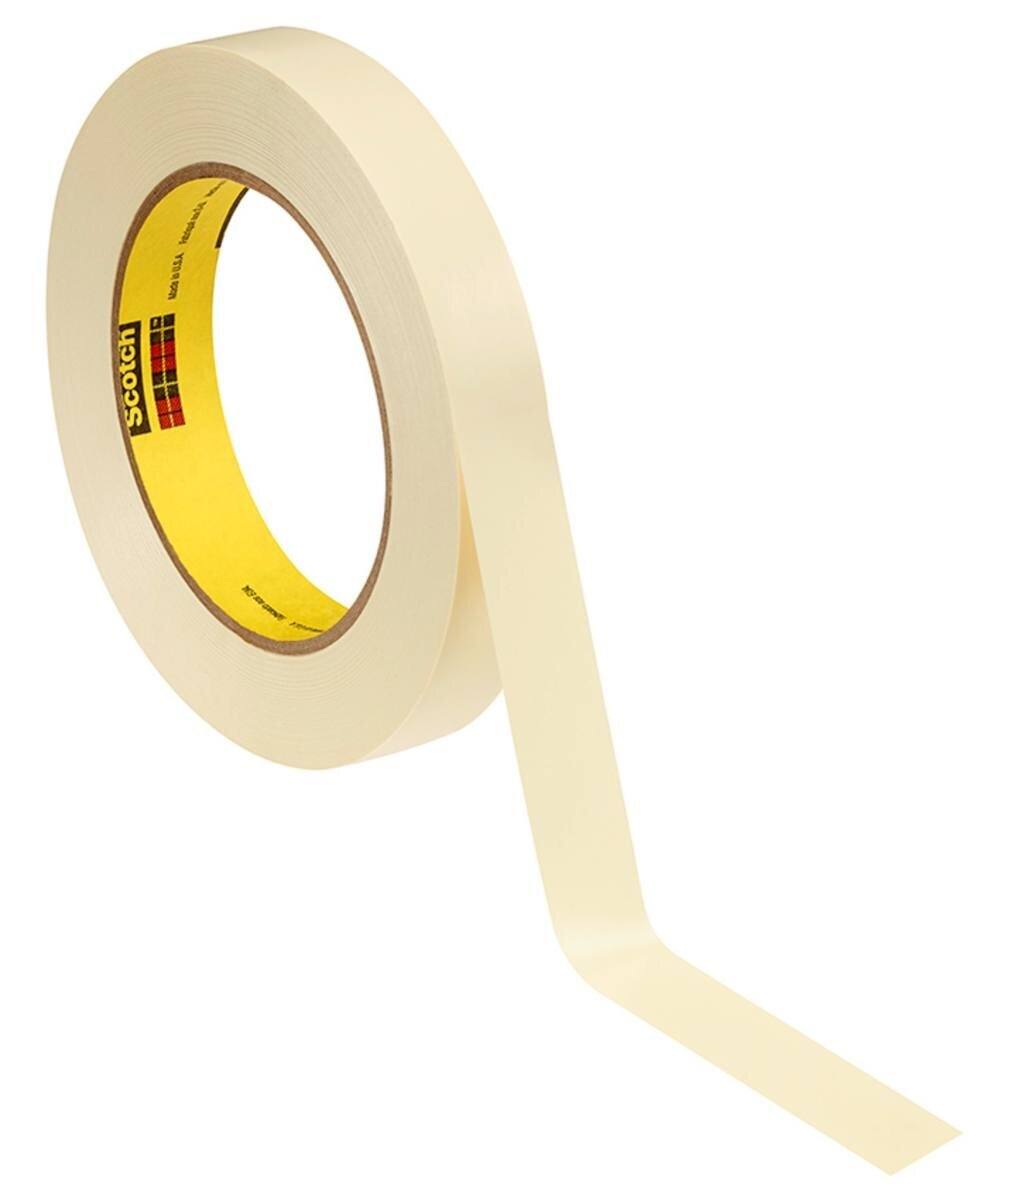 3M Electroplating tape soft PVC 470, yellow, 50 mm x 33 m, 0.18 mm